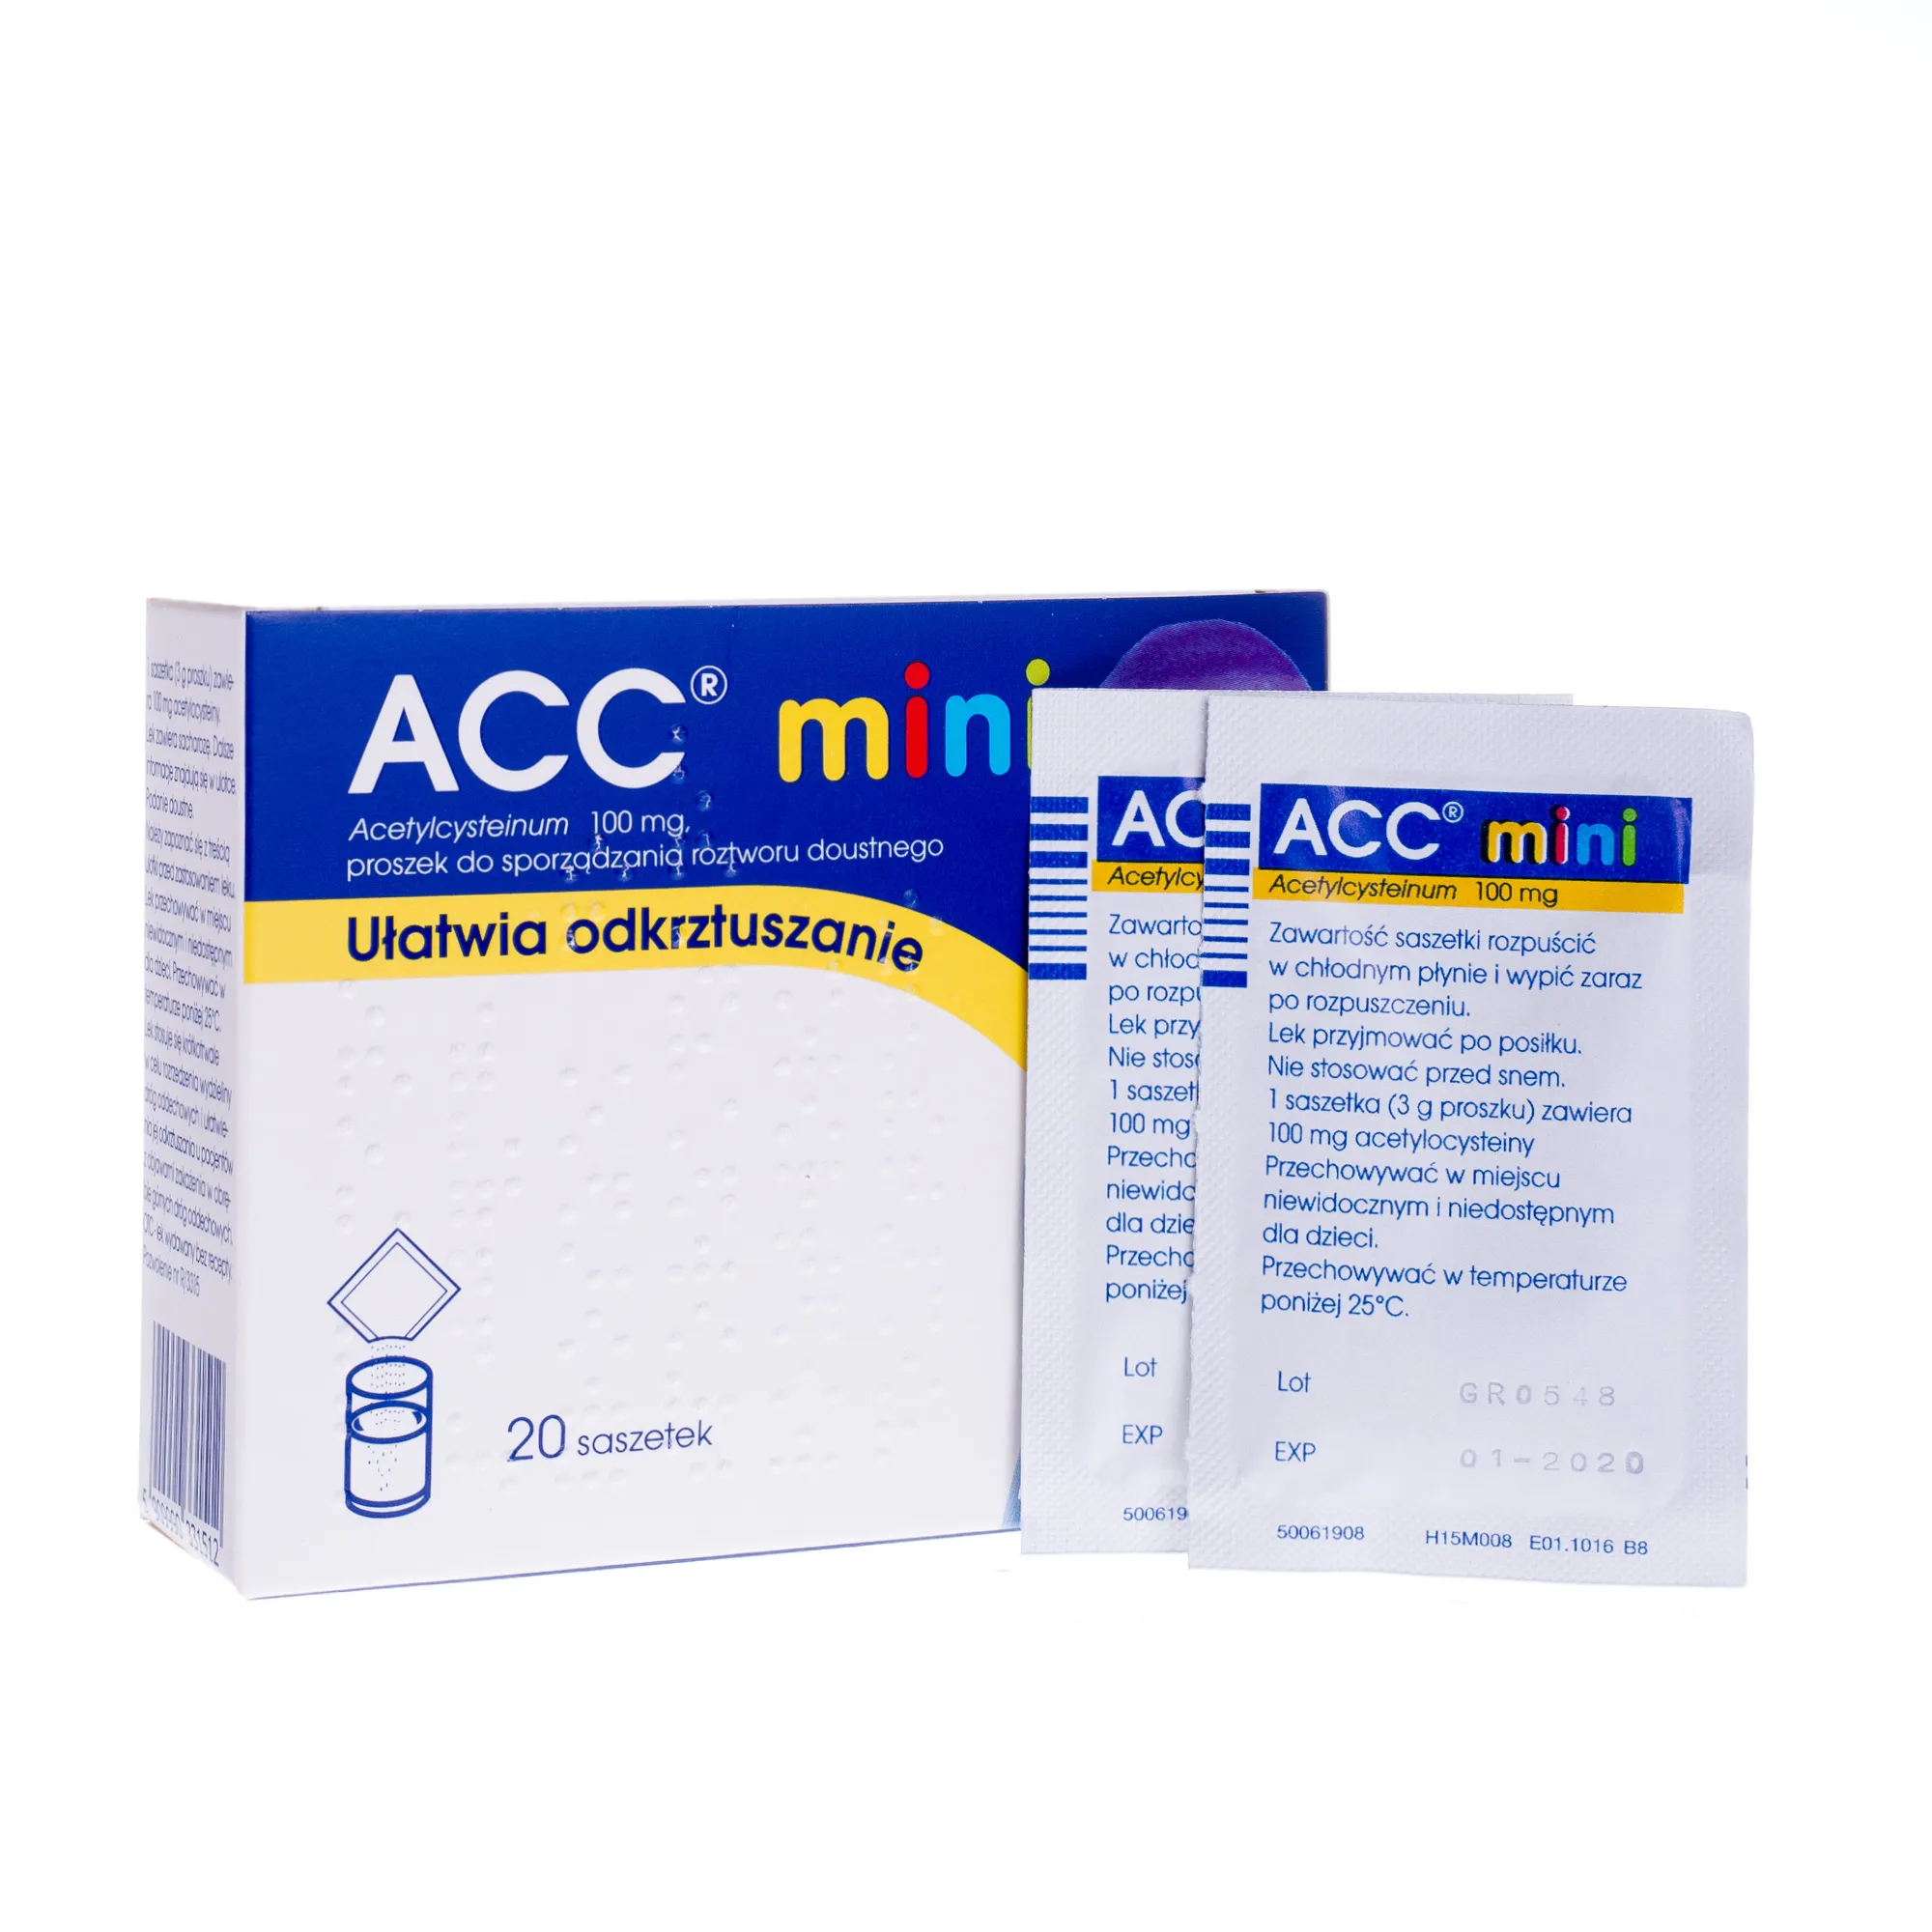 ACC mni, Acetylcysteinum 100 mg, 20 saszetek